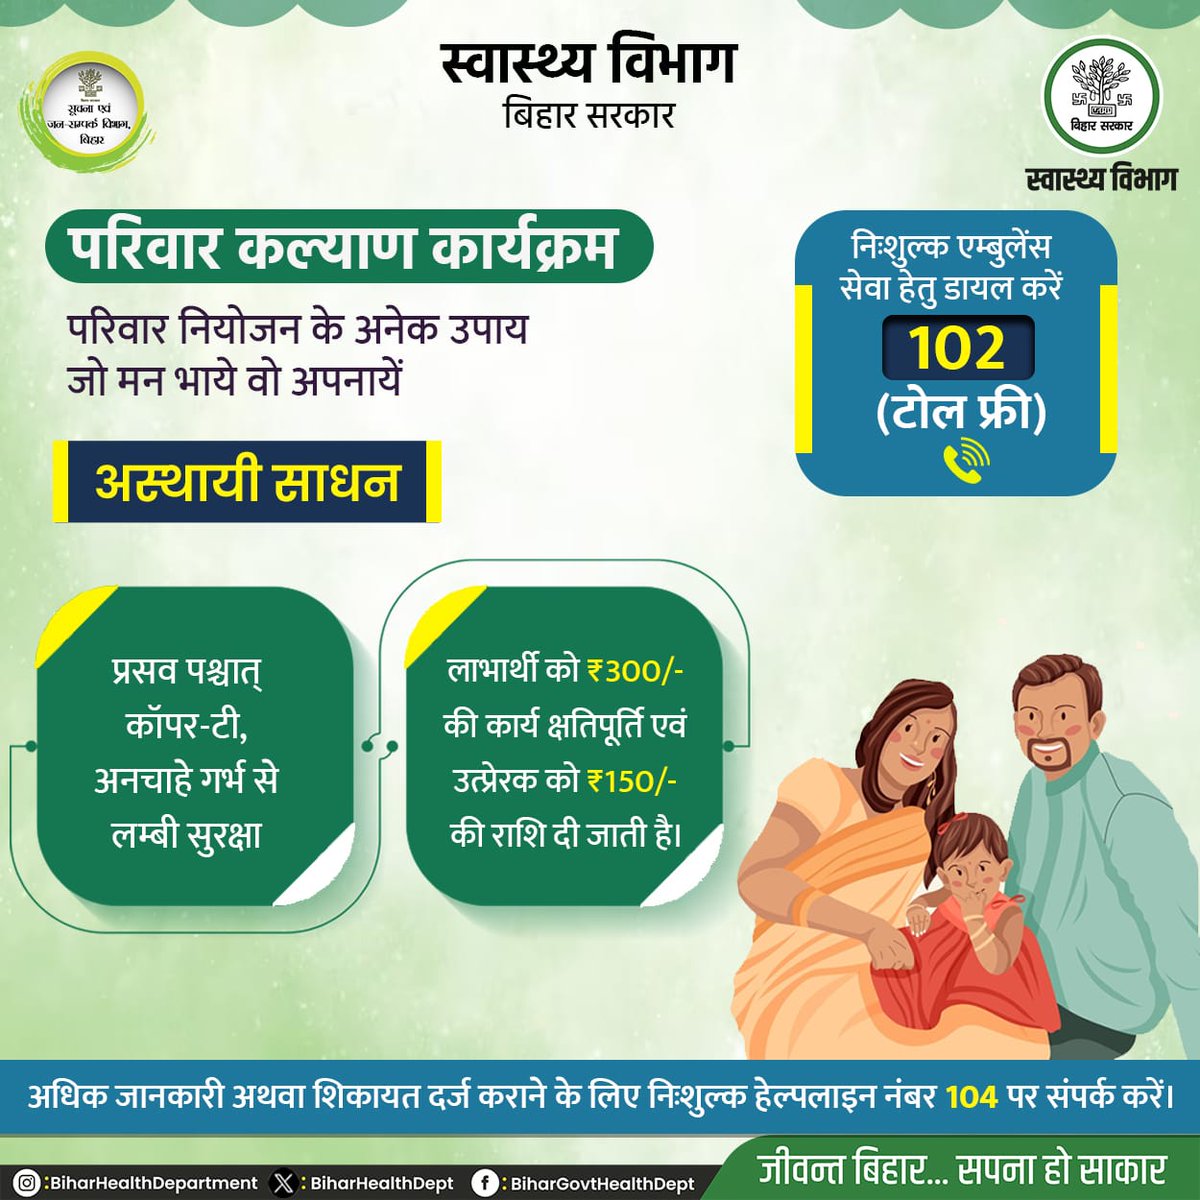 परिवार नियोजन के अनेक उपाय, जो मन भाये वो अपनायें @IPRD_Bihar @SHSBihar #BiharHealthDept #familyplanning